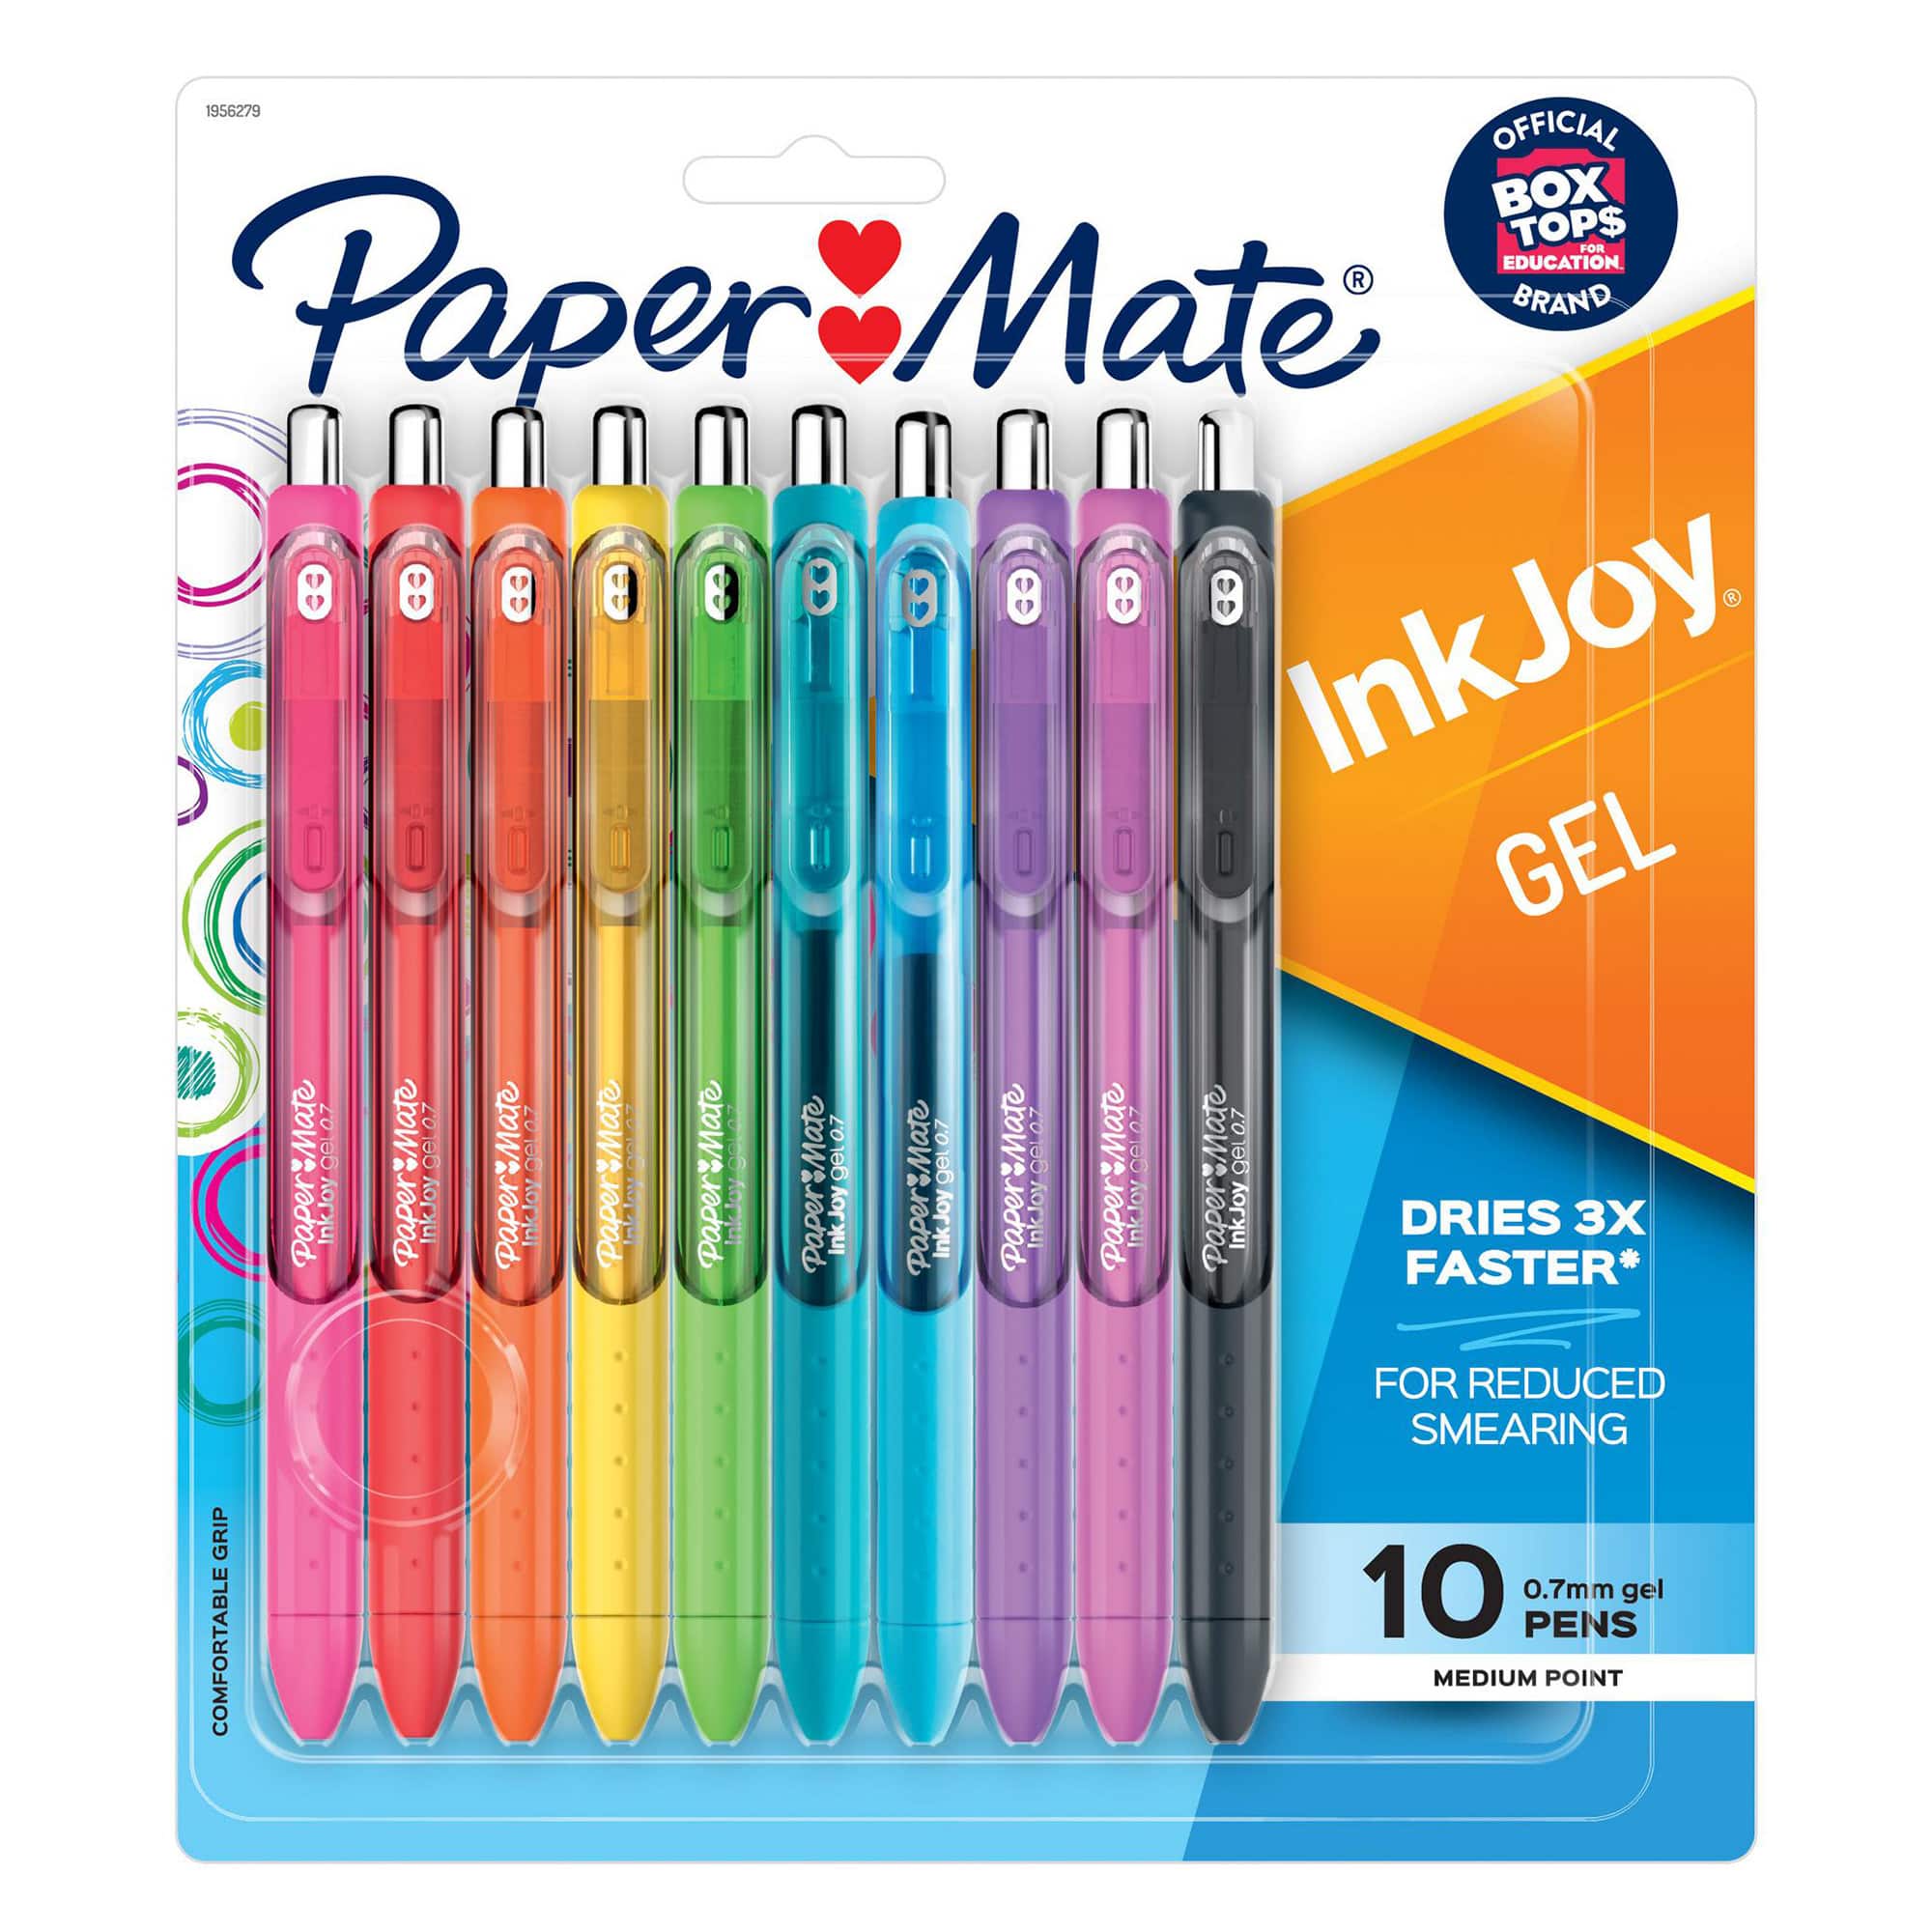 Paper Mate Inkjoy Gel Berry, Retractable Medium Gel Pen - Pack of 3